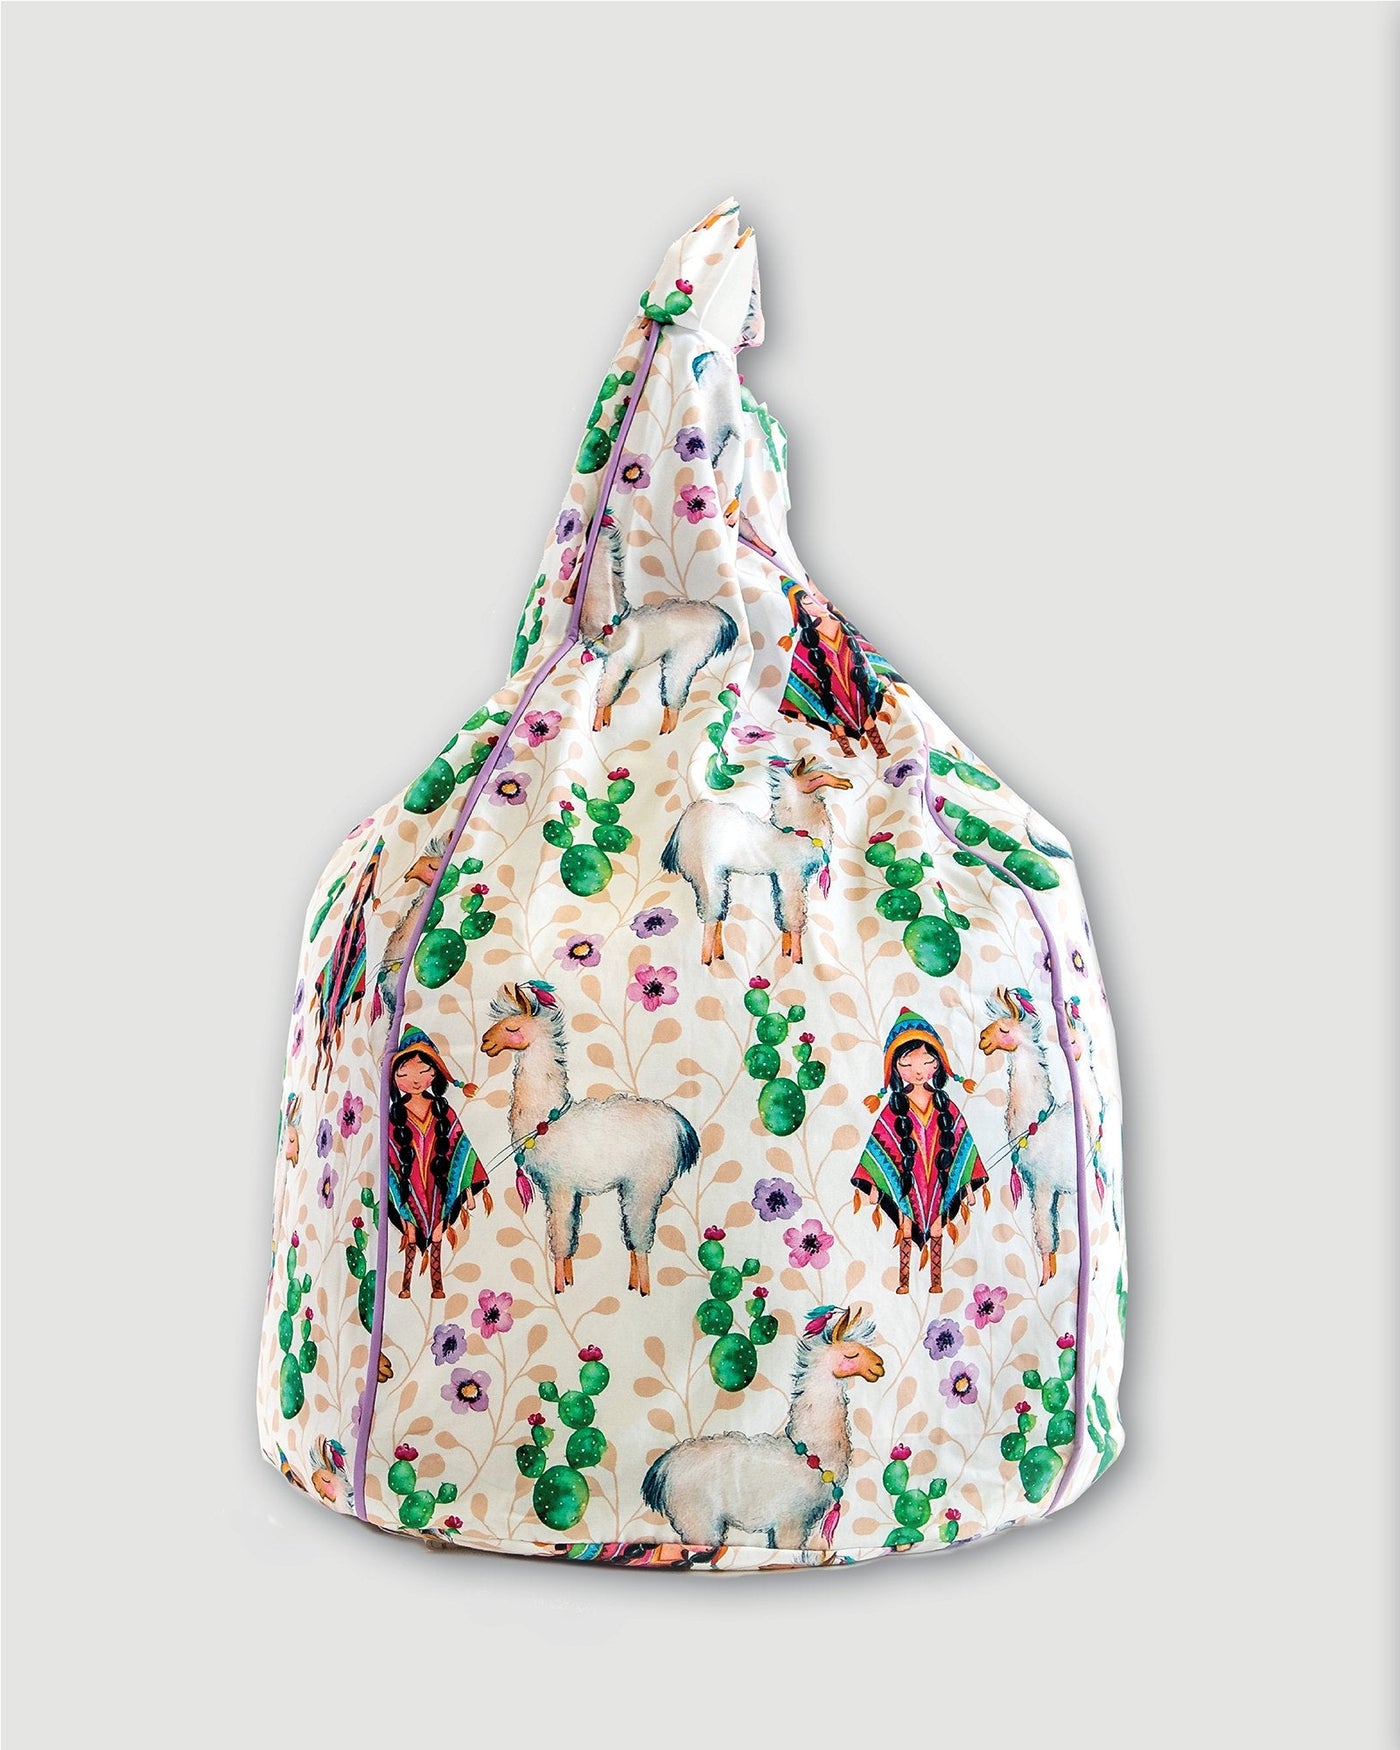 Bean Bag Cover - Peruvian Friends - Small Bean Bags Cocoon Couture 